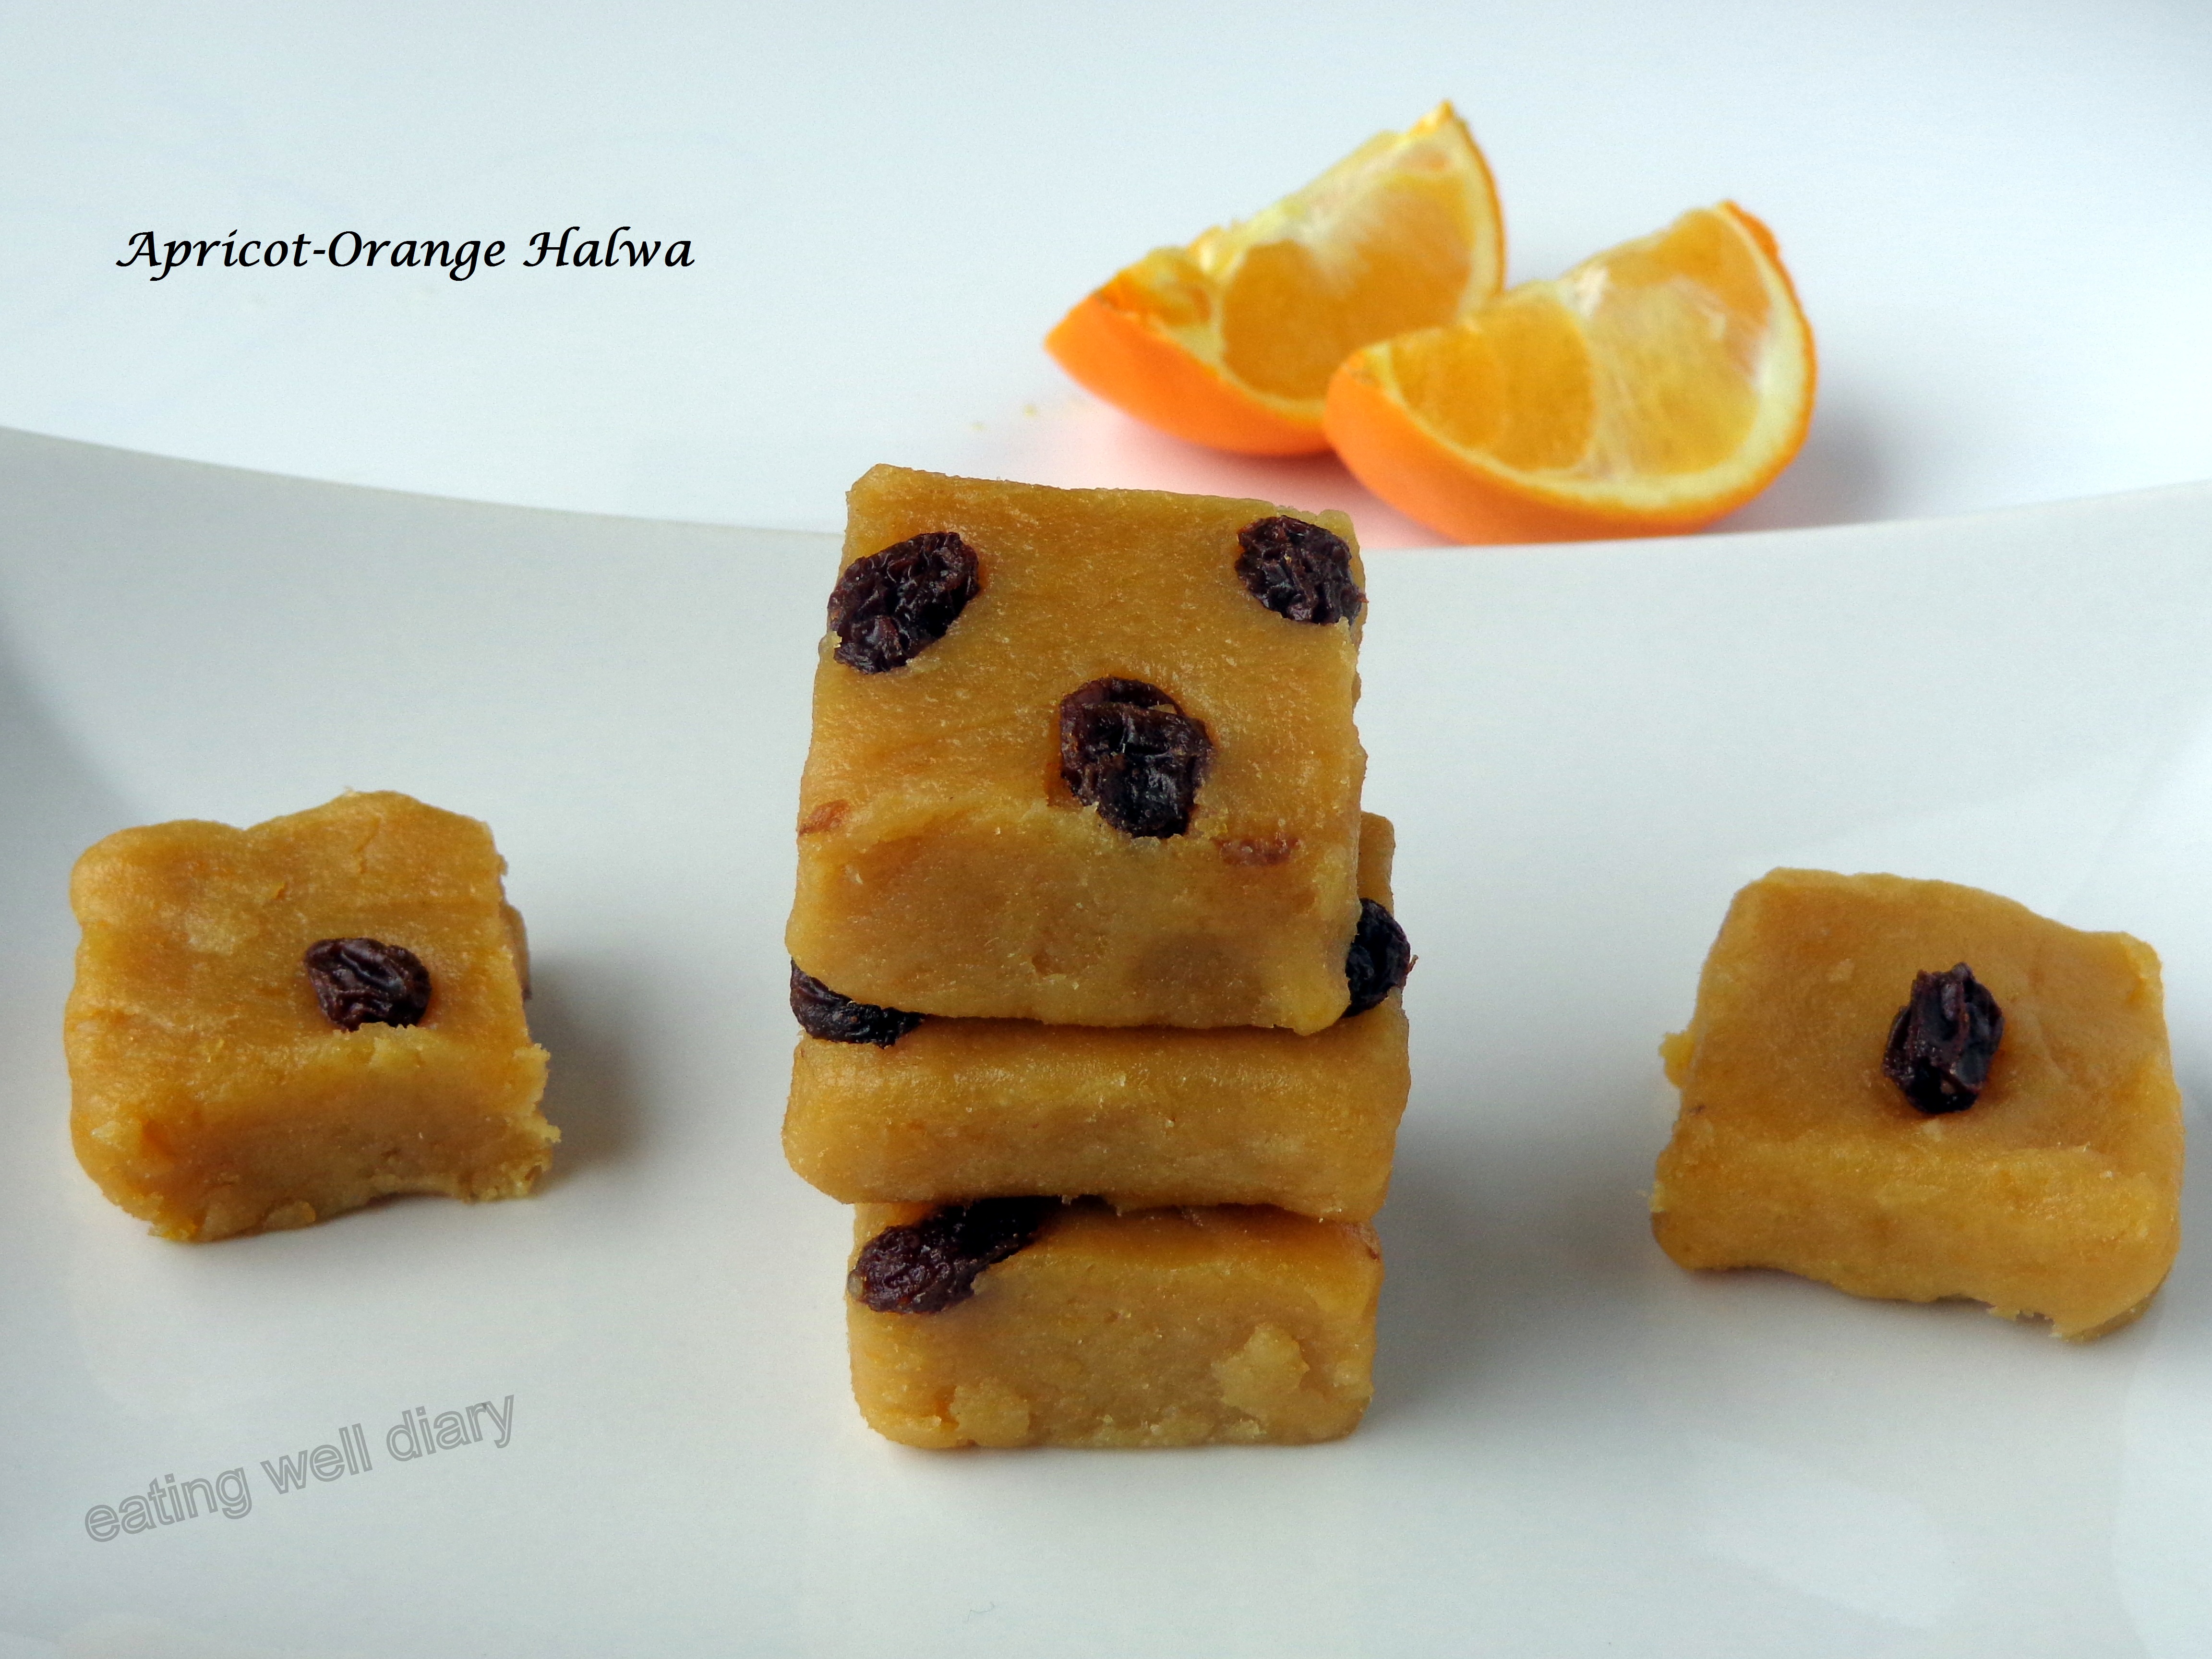 Apricot-Orange halwa or fudge (gluten-free, vegan)